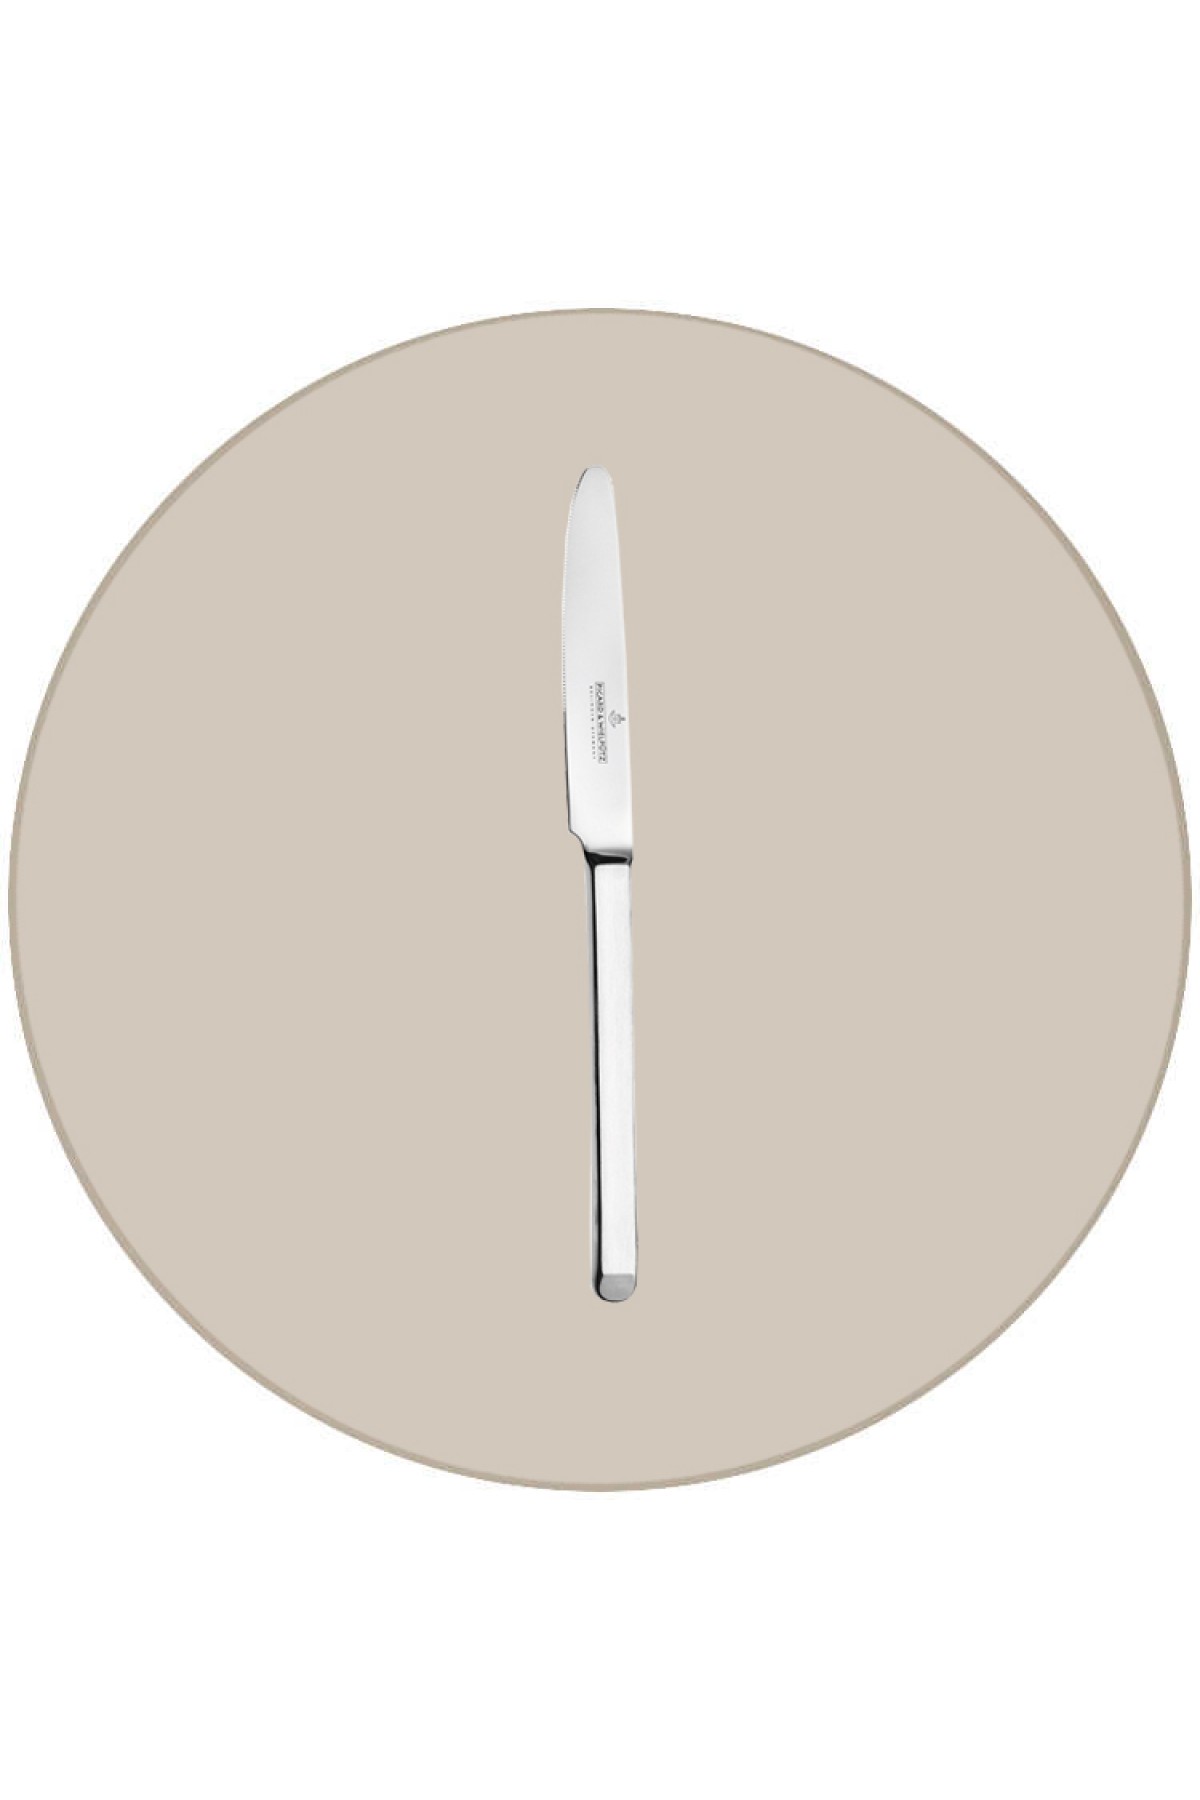 Solingen Picard Portofino Yemek Bıçağı